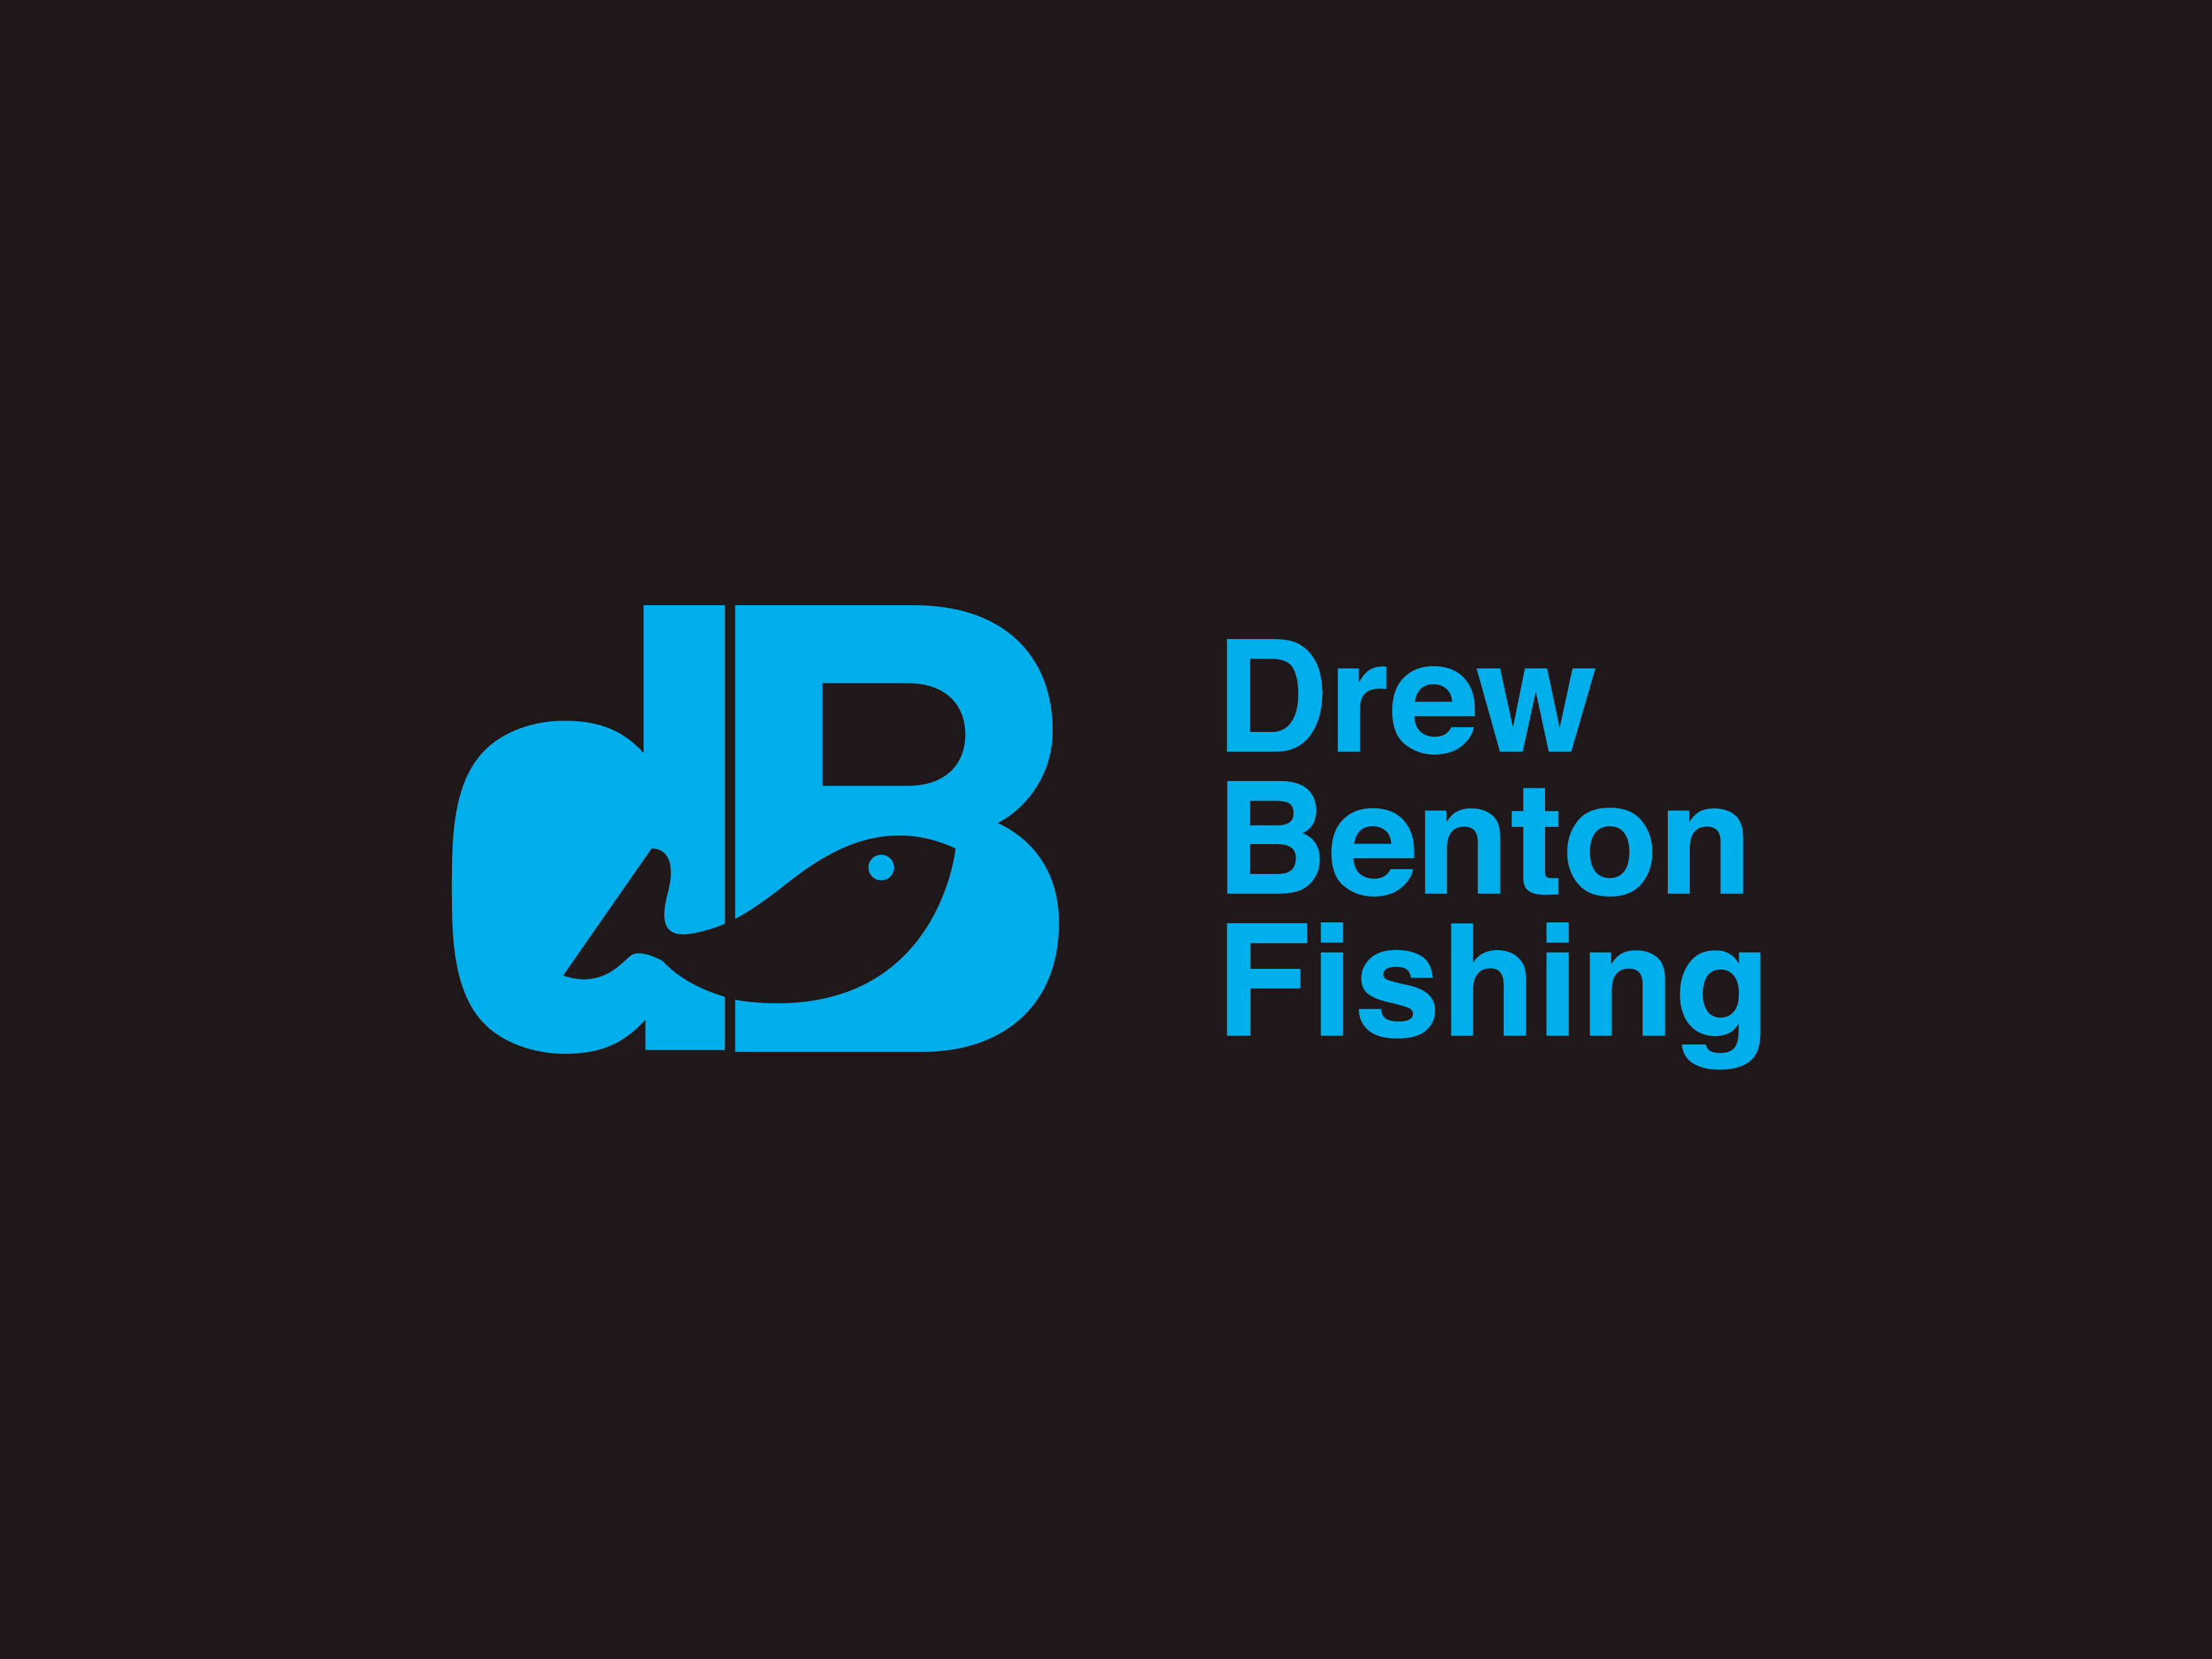 Logo Design entry 1069269 submitted by VIEaziz to the Logo Design for Drew Benton Fishing run by Drewbentonfishing